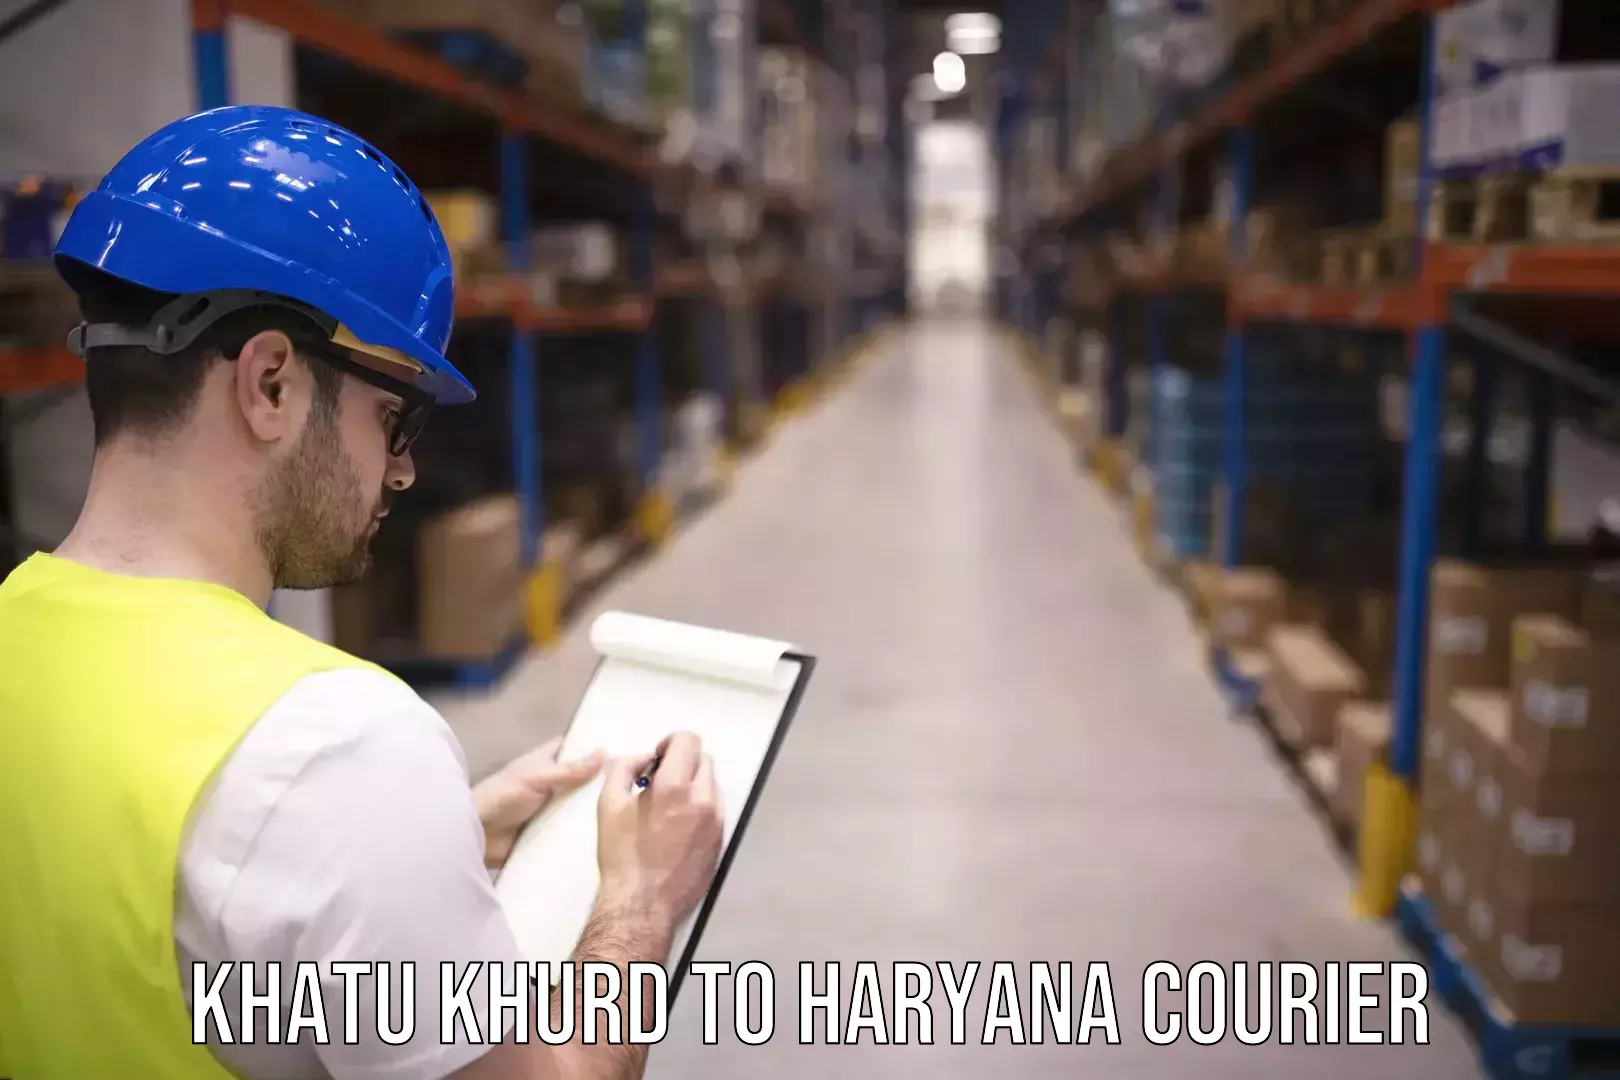 Courier service comparison Khatu Khurd to Bilaspur Haryana